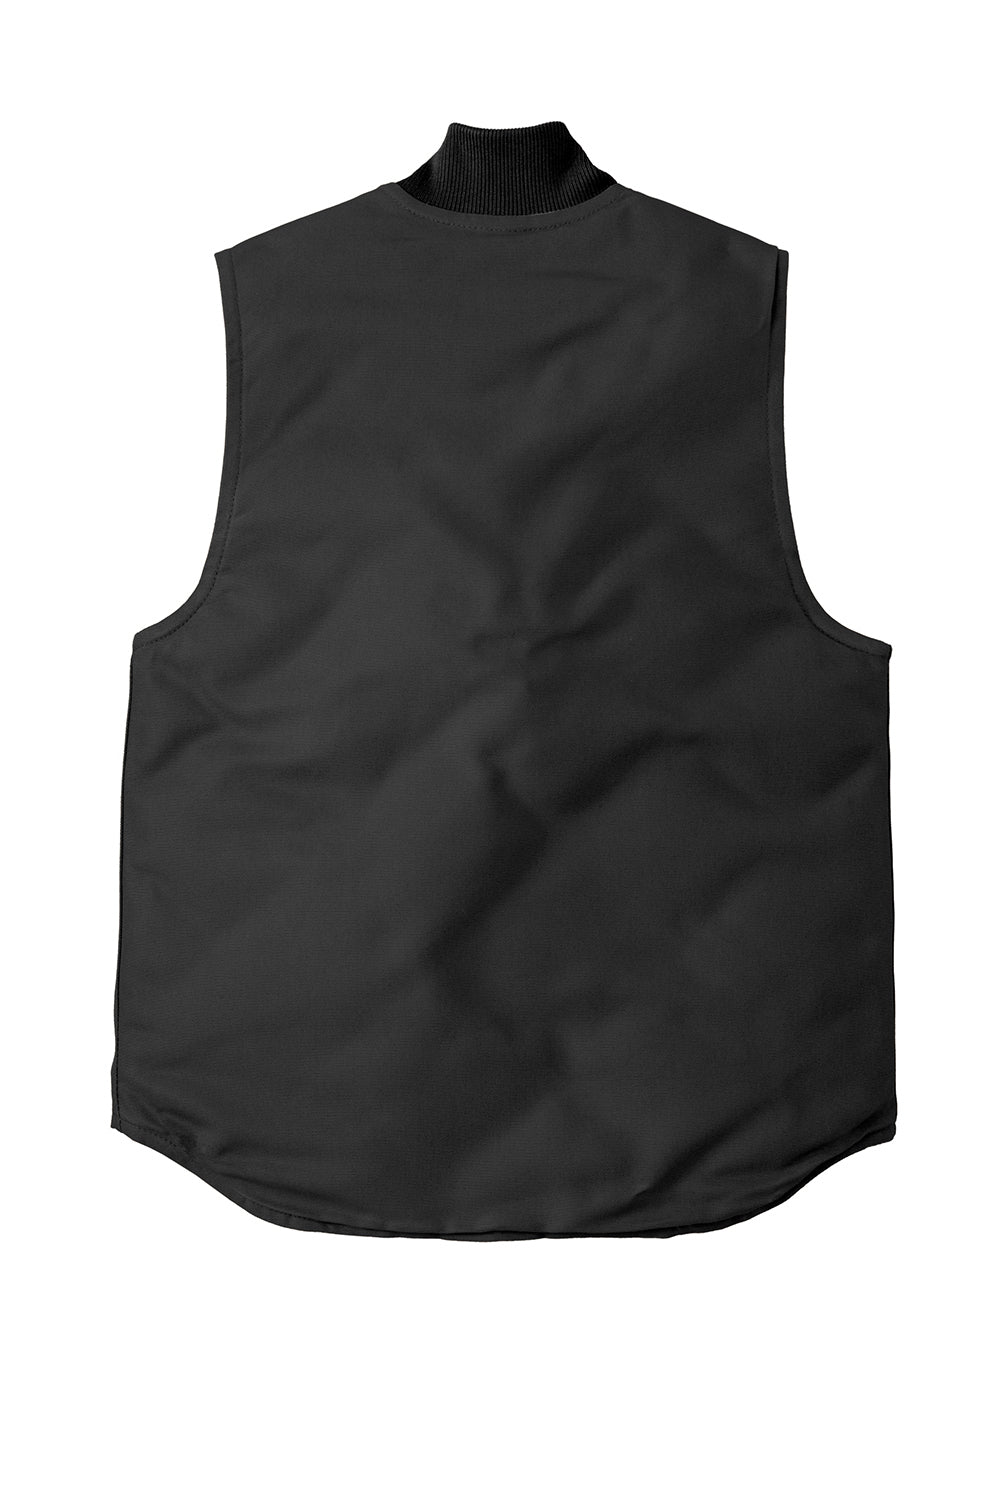 Carhartt CTV01 Mens Wind & Water Resistant Duck Cloth Full Zip Vest Black Flat Back